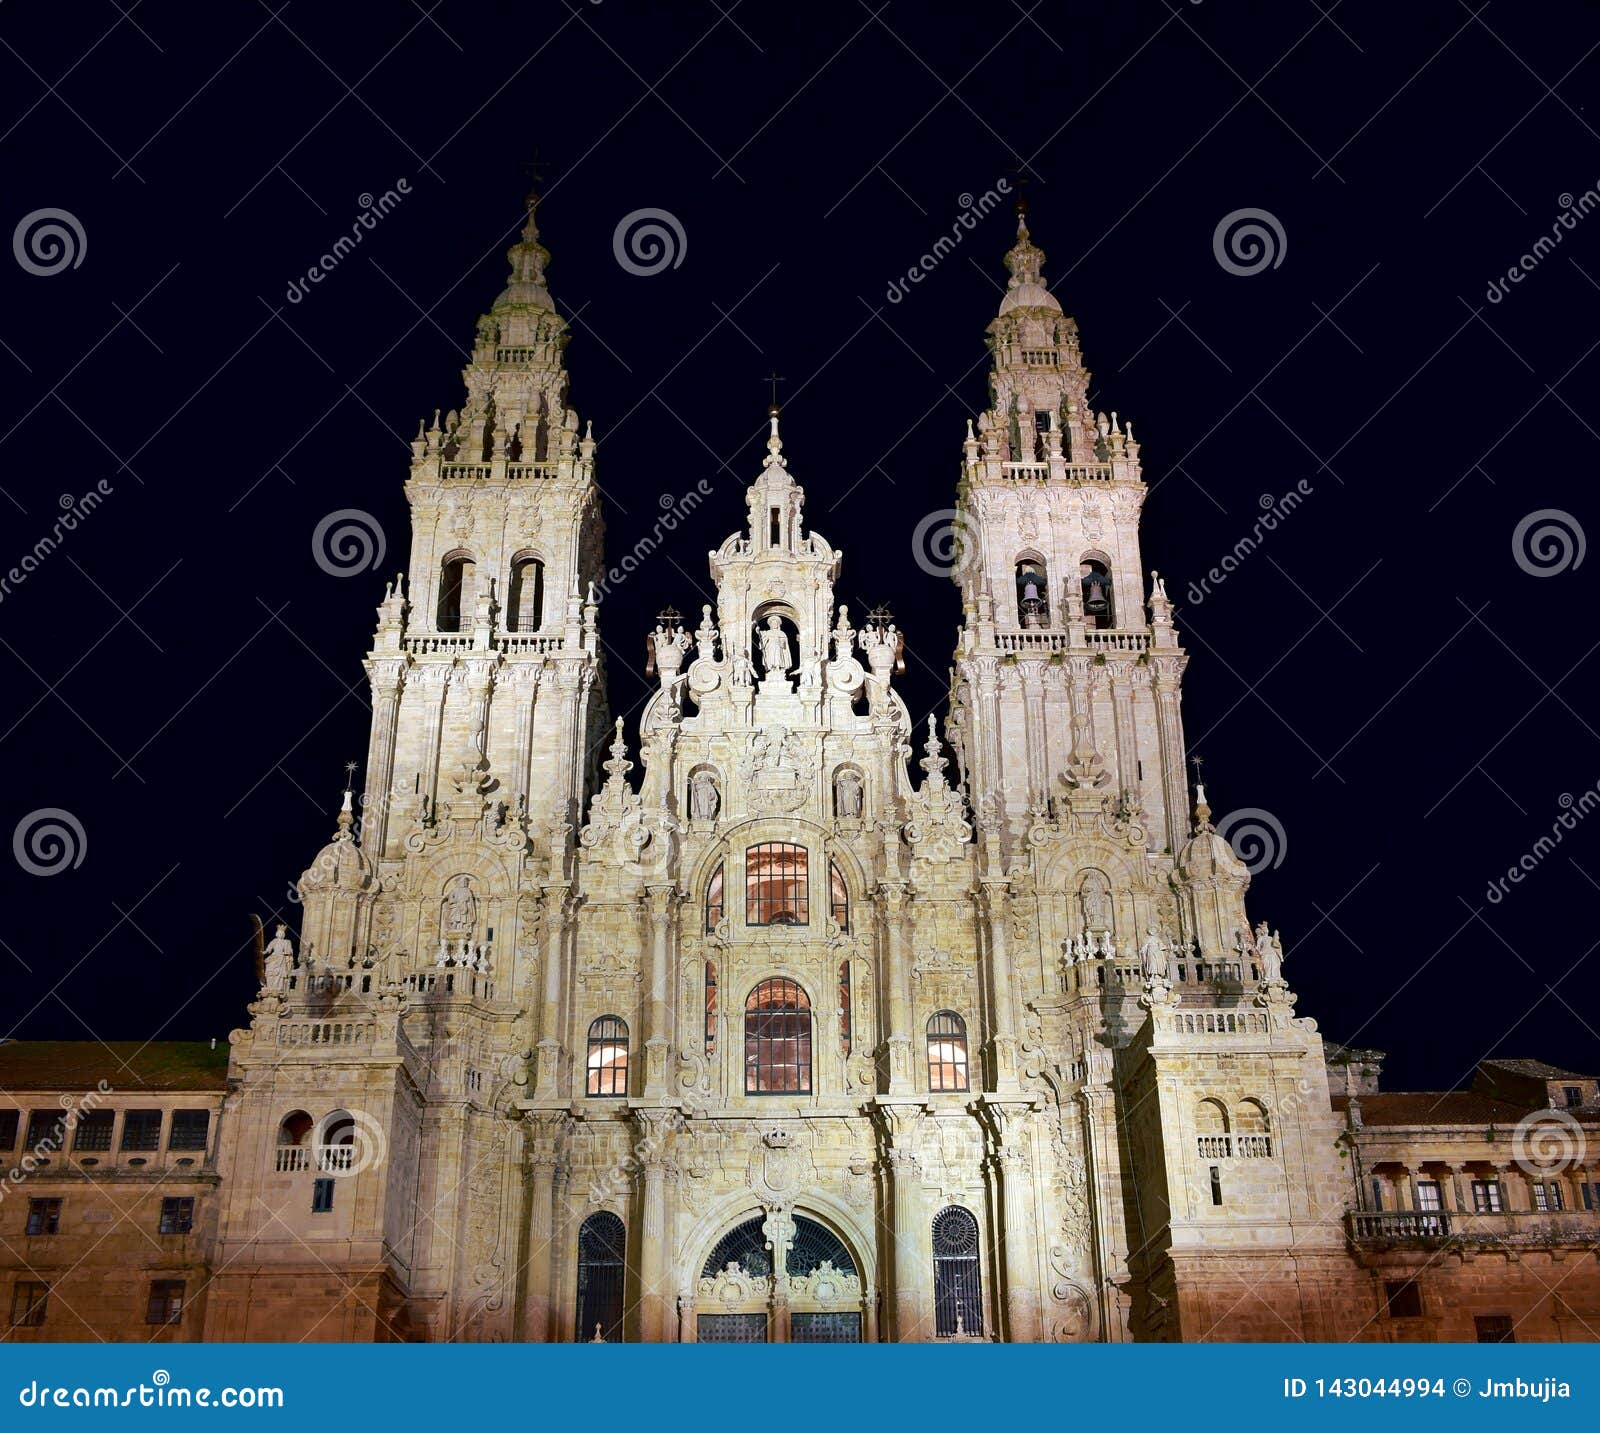 cathedral at night, baroque facade and towers. santiago de compostela, plaza del obradoiro. spain.